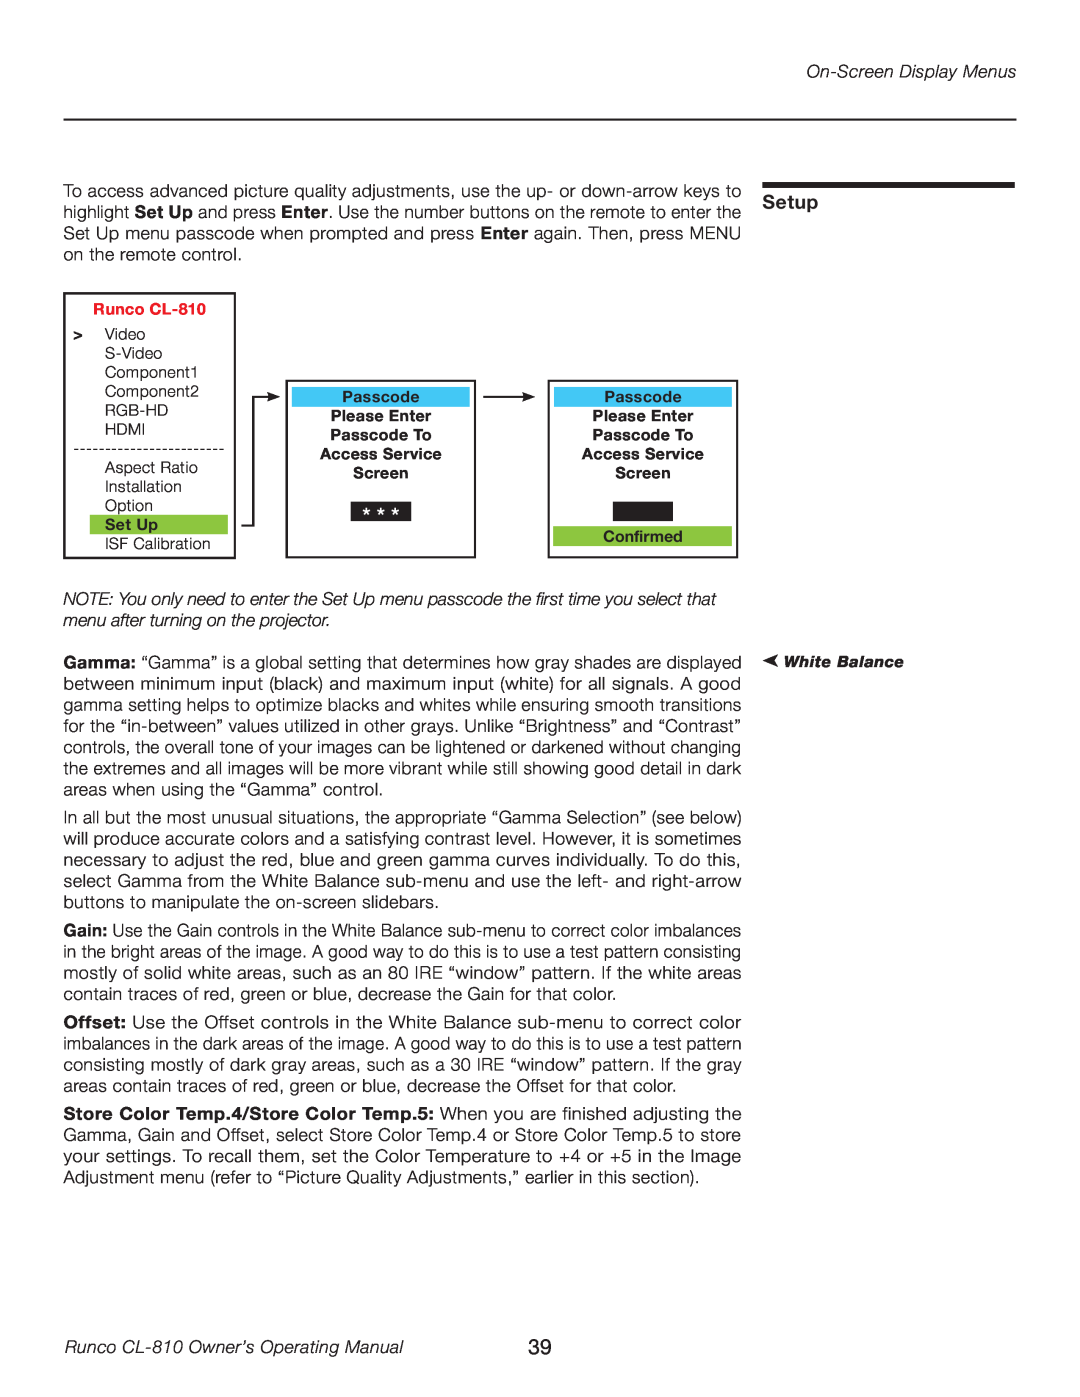 Runco manual Setup, On-Screen Display Menus, Runco CL-810 Owner’s Operating Manual, White Balance 